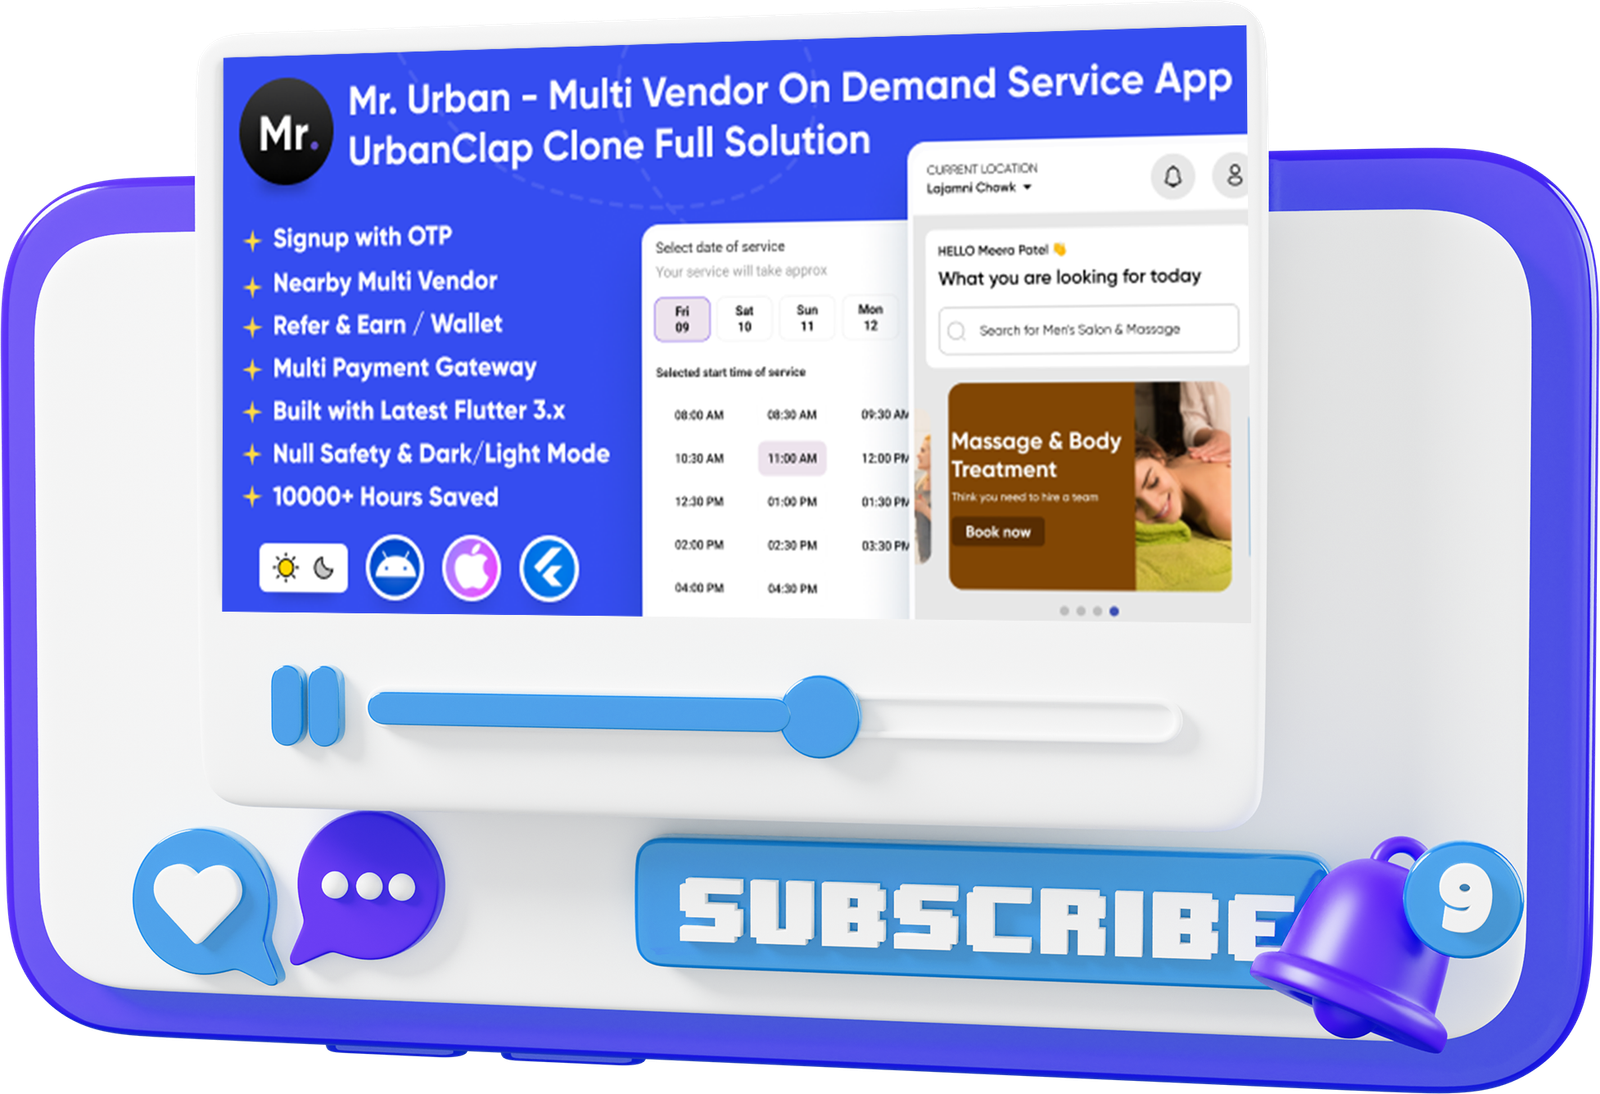 Mr. Urban - Multi Vendor On Demand Home Service App | UrbanClap Clone | Android & iOS Full Solution - 4